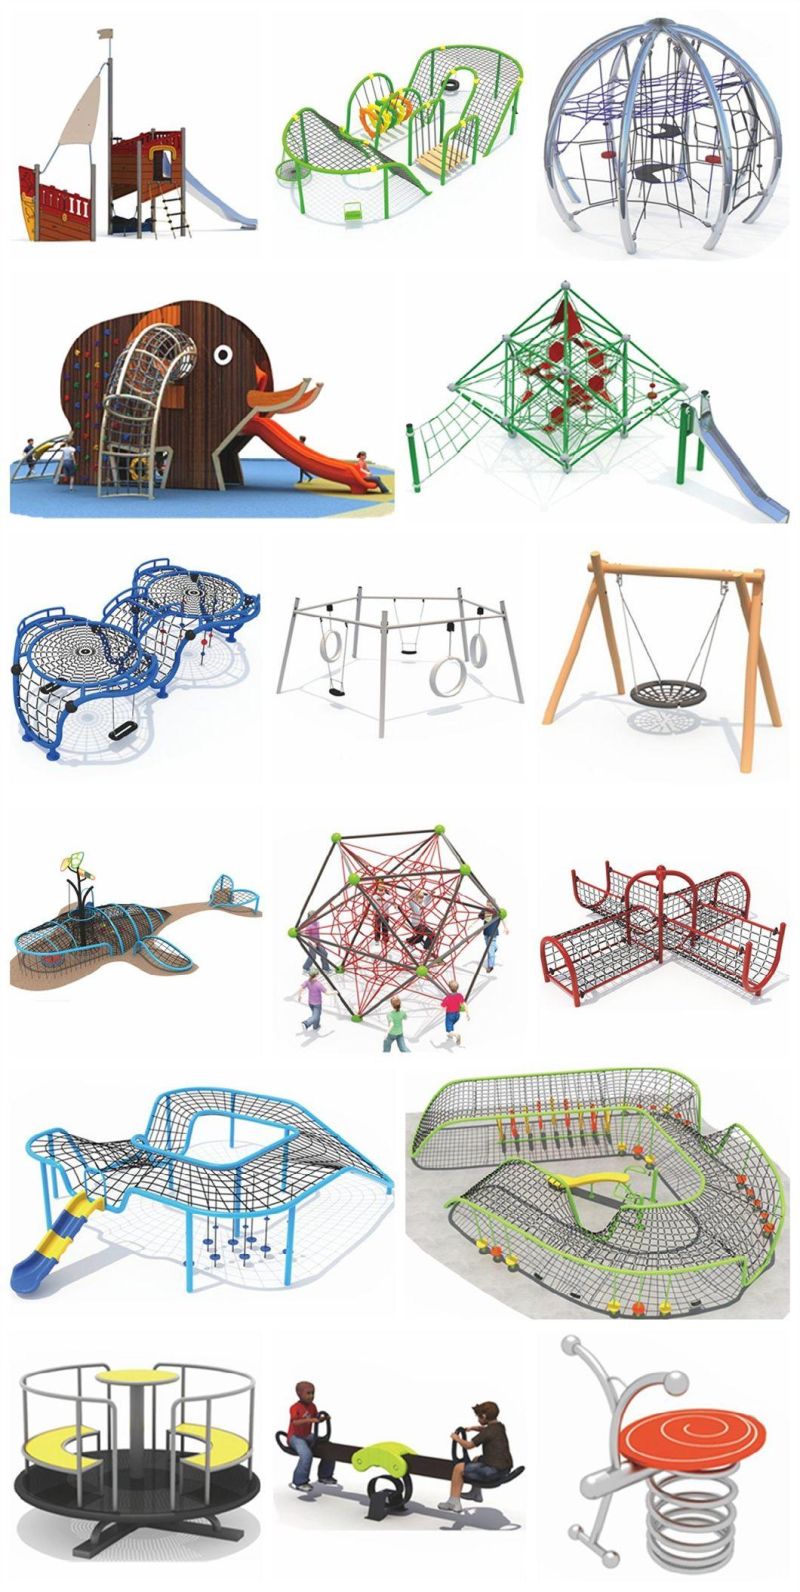 Customized Community Wooden Slide Climbing Outdoor Kids Playground Equipment Ym74